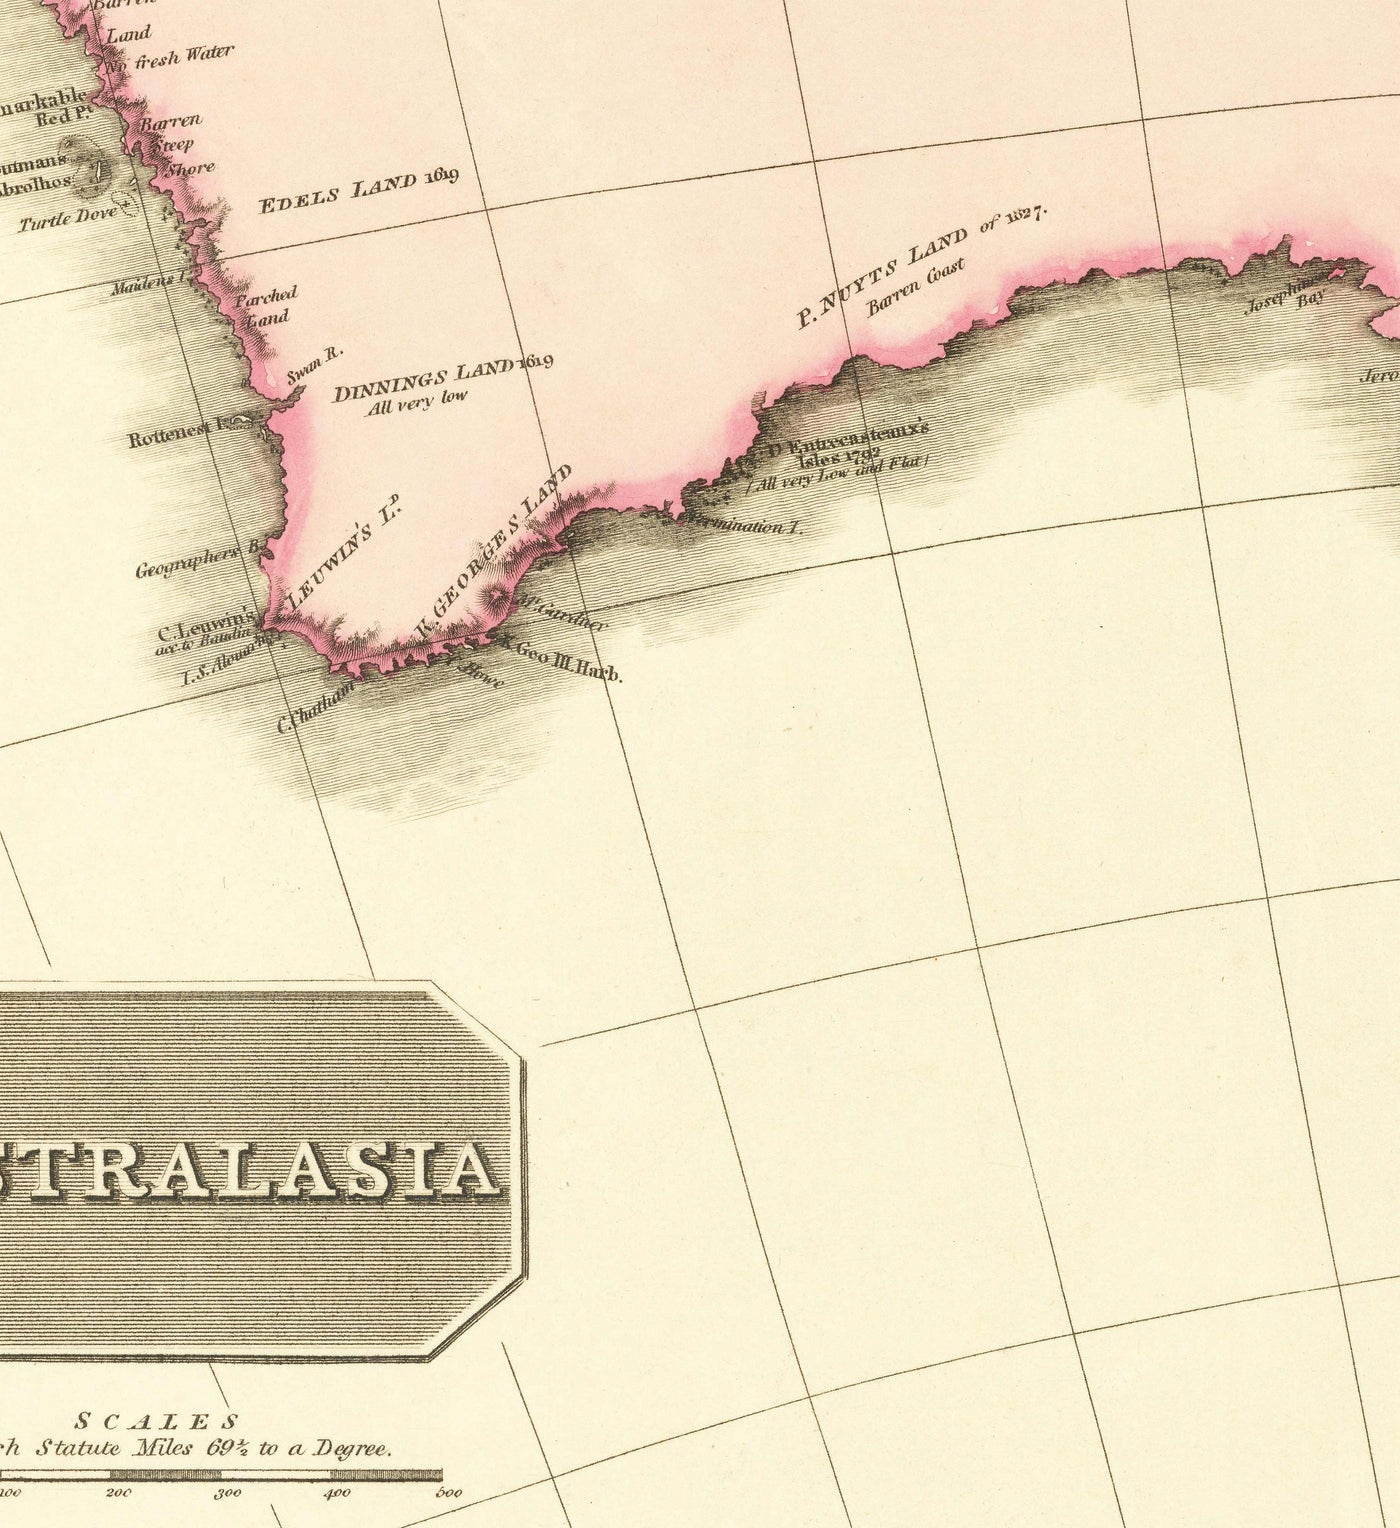 Old Map of Australia by John Pinkerton, 1813 - Australasia, Oceania, Melanesia - New South Wales Penal Colony